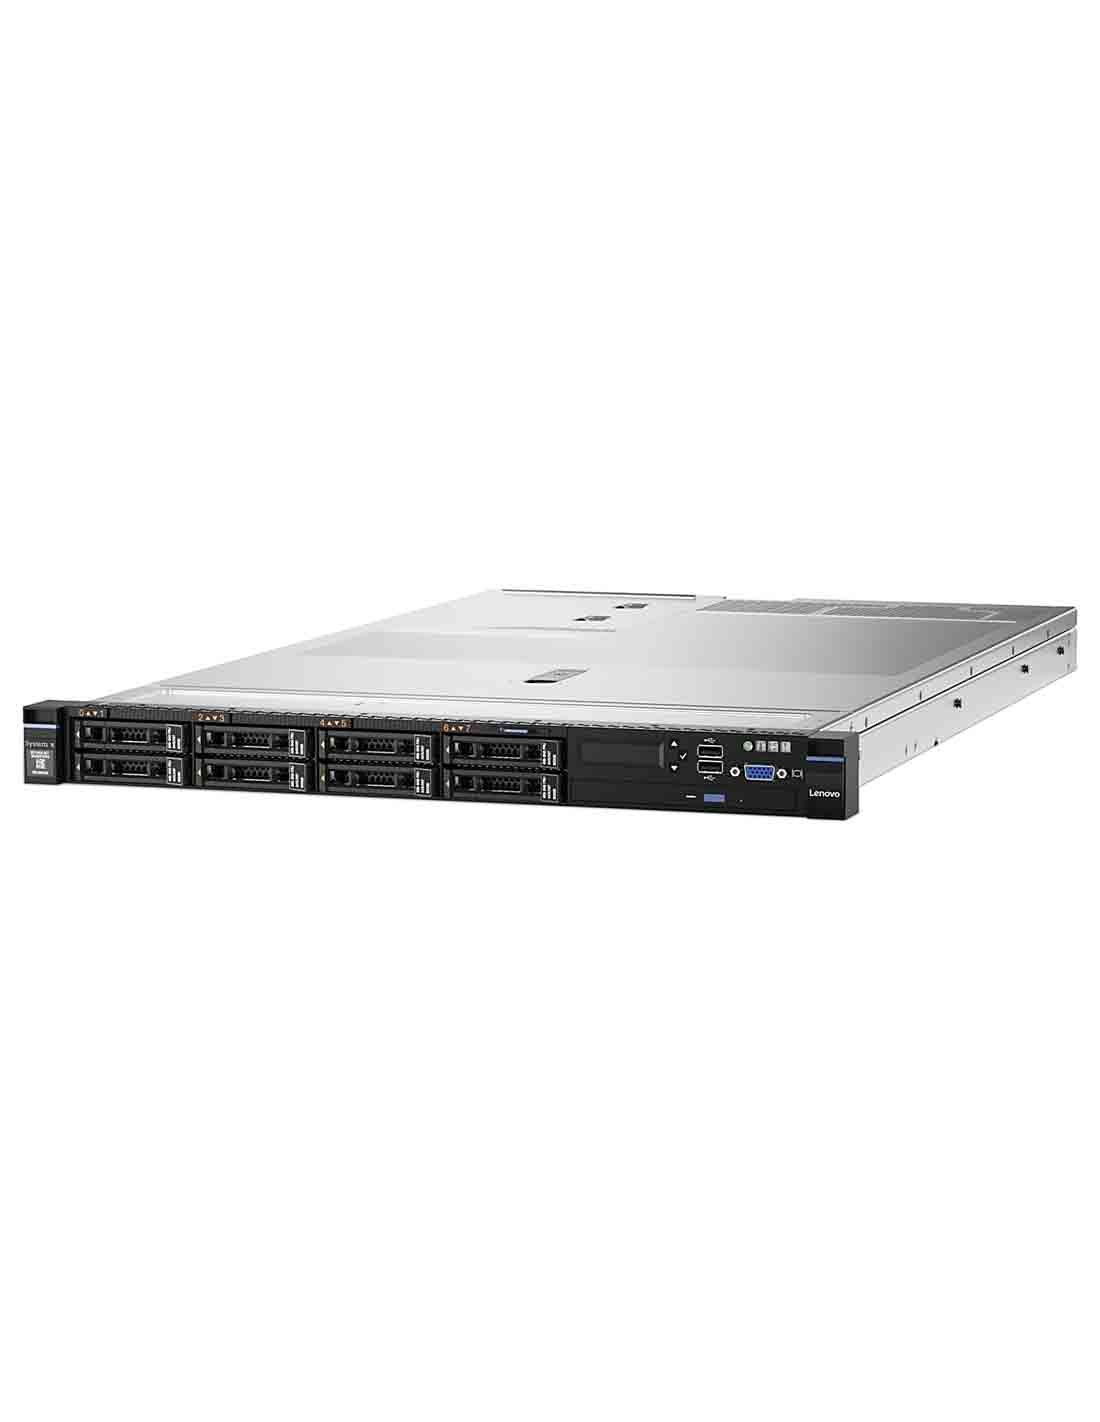 Lenovo x3550 M5 Rack Server E5-2620v4 8869ETG at a Cheap Price